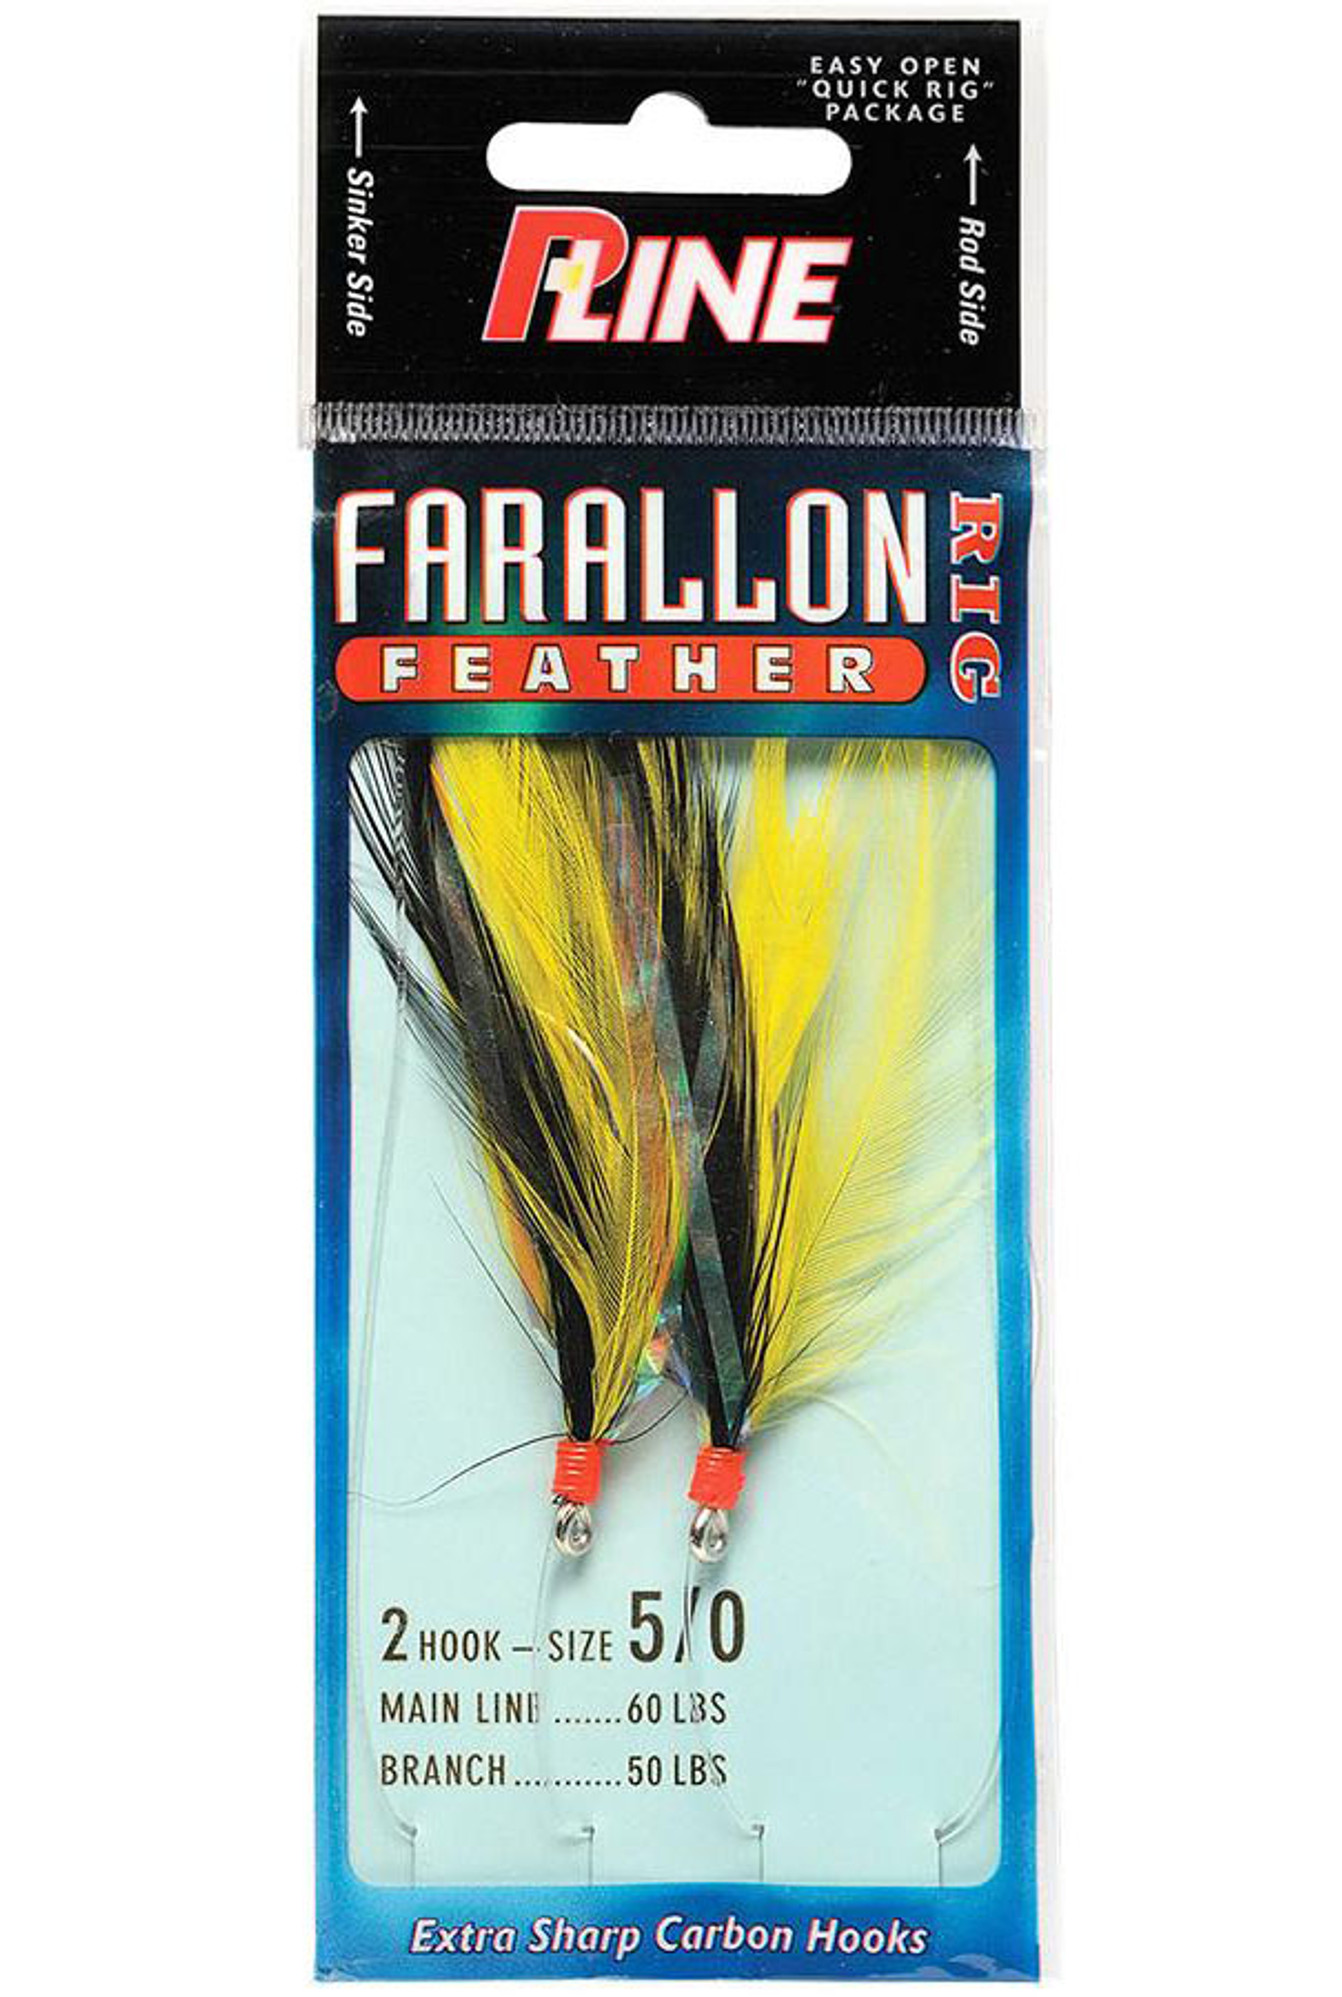 P-Line Farallon Feathers Vertical Fishing Jigs (Size: 3/0 Yellow & Black)